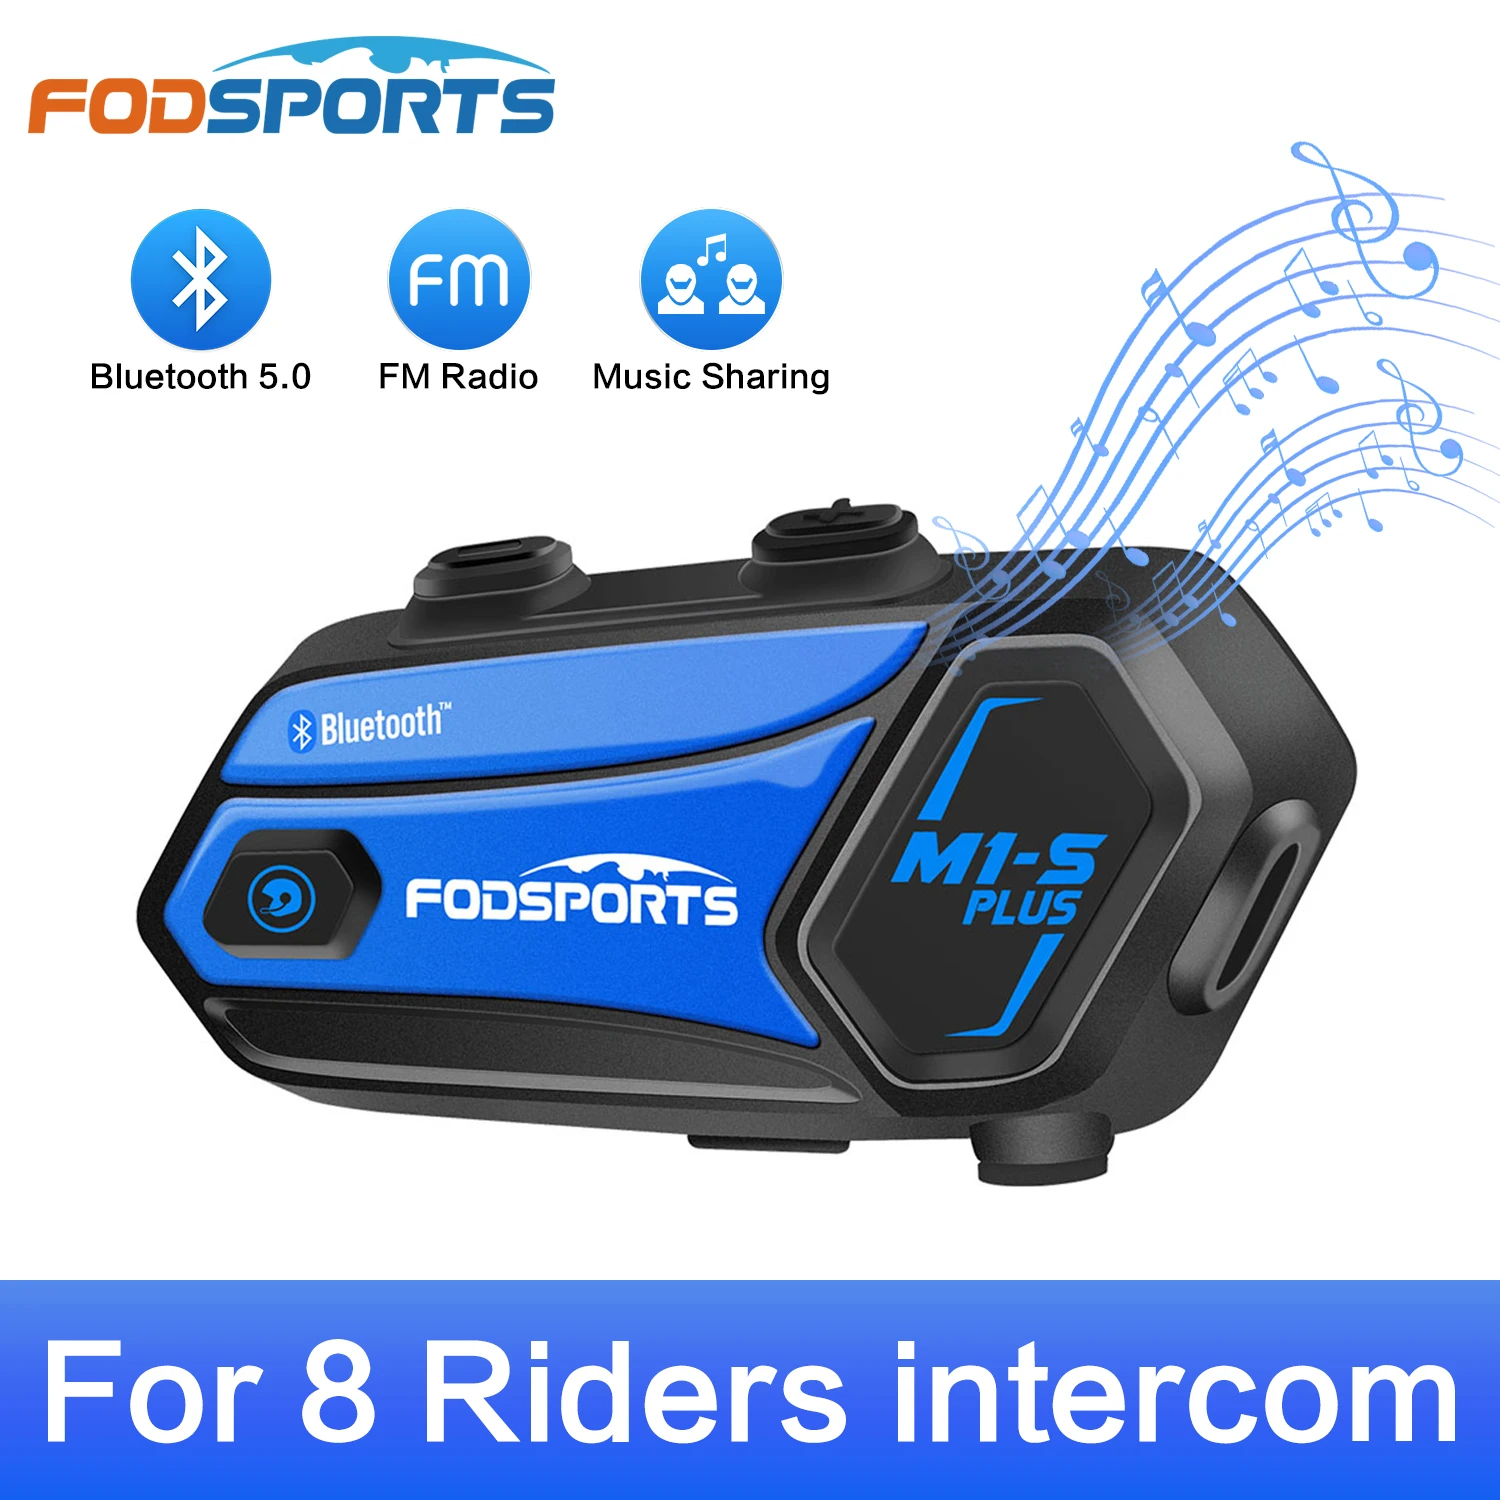 Fodsports M1-S Plus Motorcycle Helmet Intercom for 8 riders Waterproof Wireless Bluetooth Headset intercomunicador music sharing